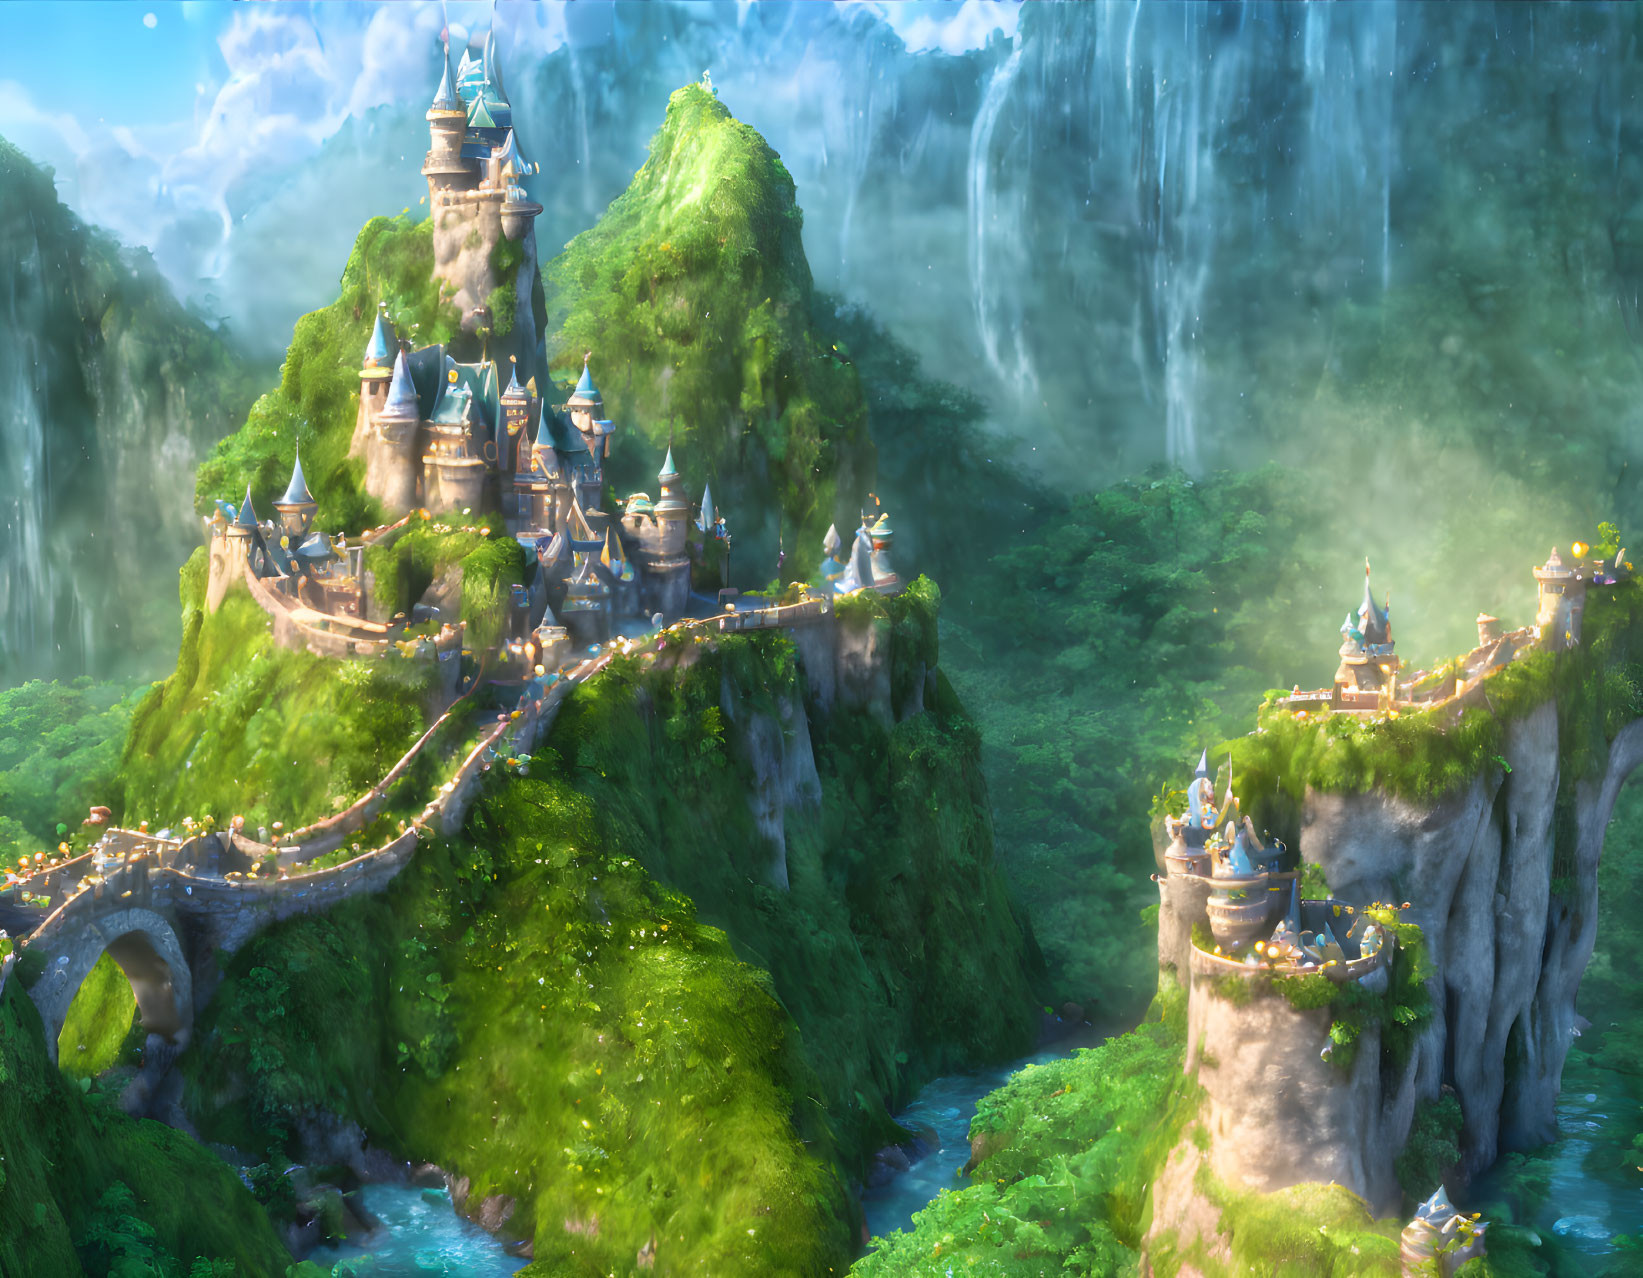 Fairytale Fantasyland